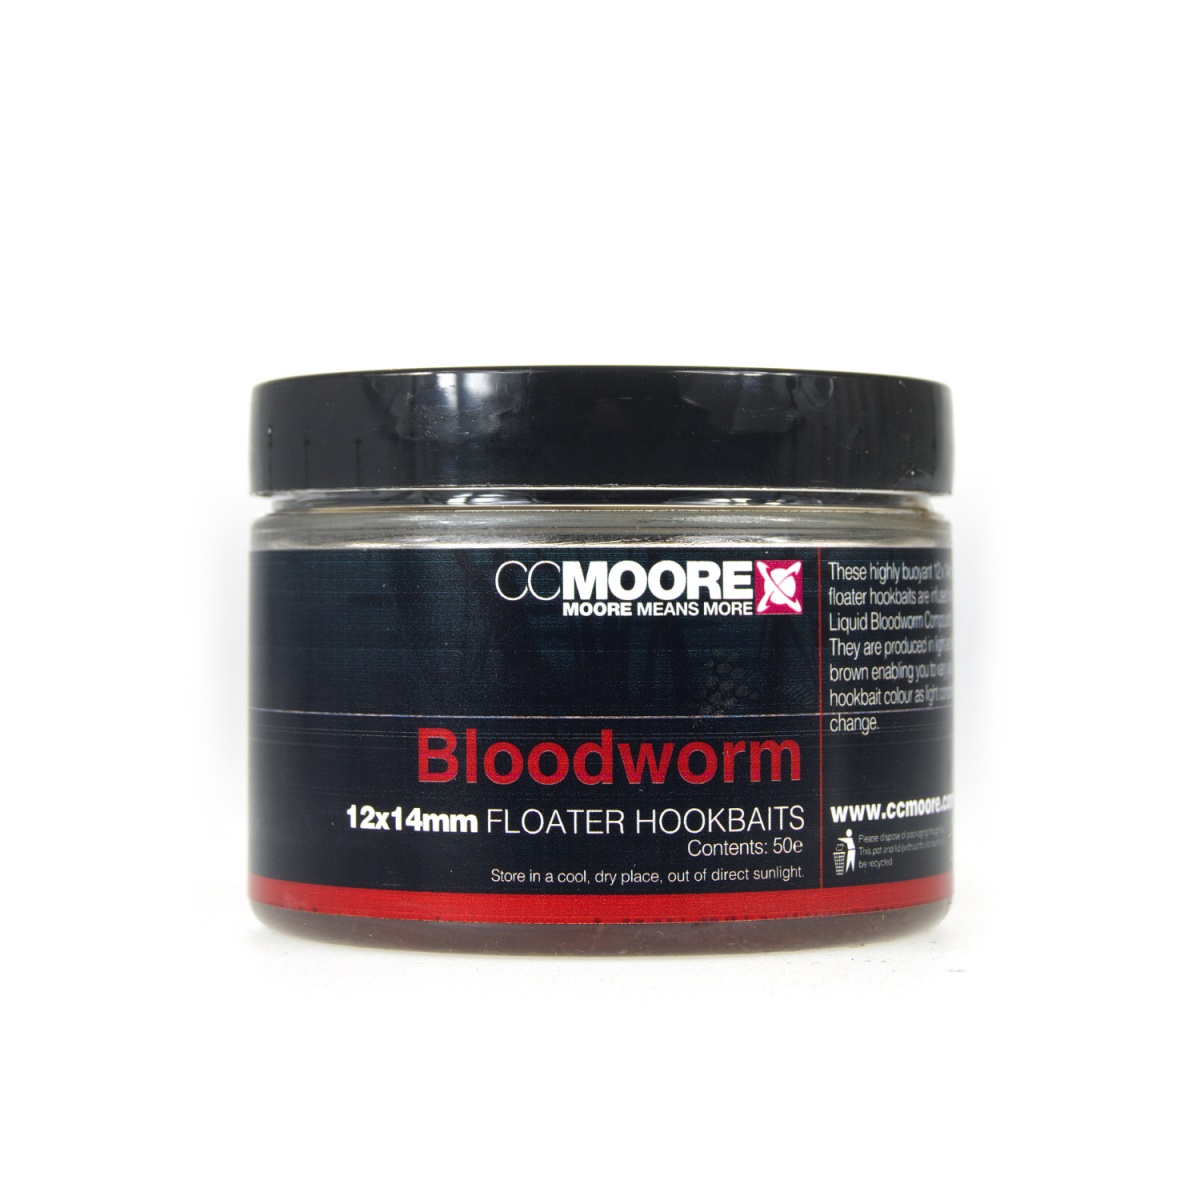 Bloodworm Floater Hookbaits